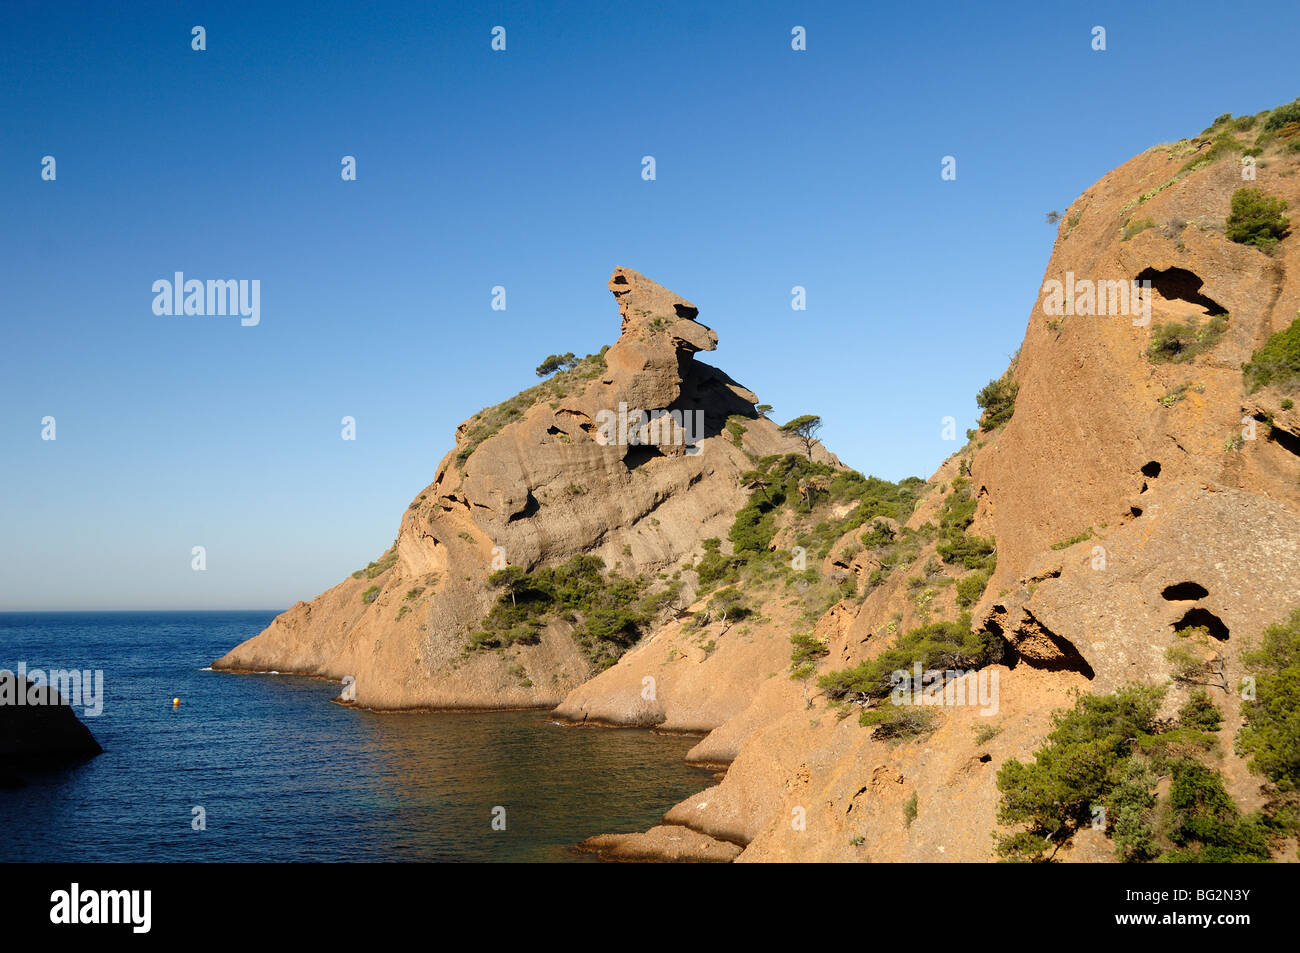 Calanque de Figuerolles, Bay Inlet & Eroded Rock Formations, Nationalpark Calanques, La Ciotat, Provence, Frankreich Stockfoto